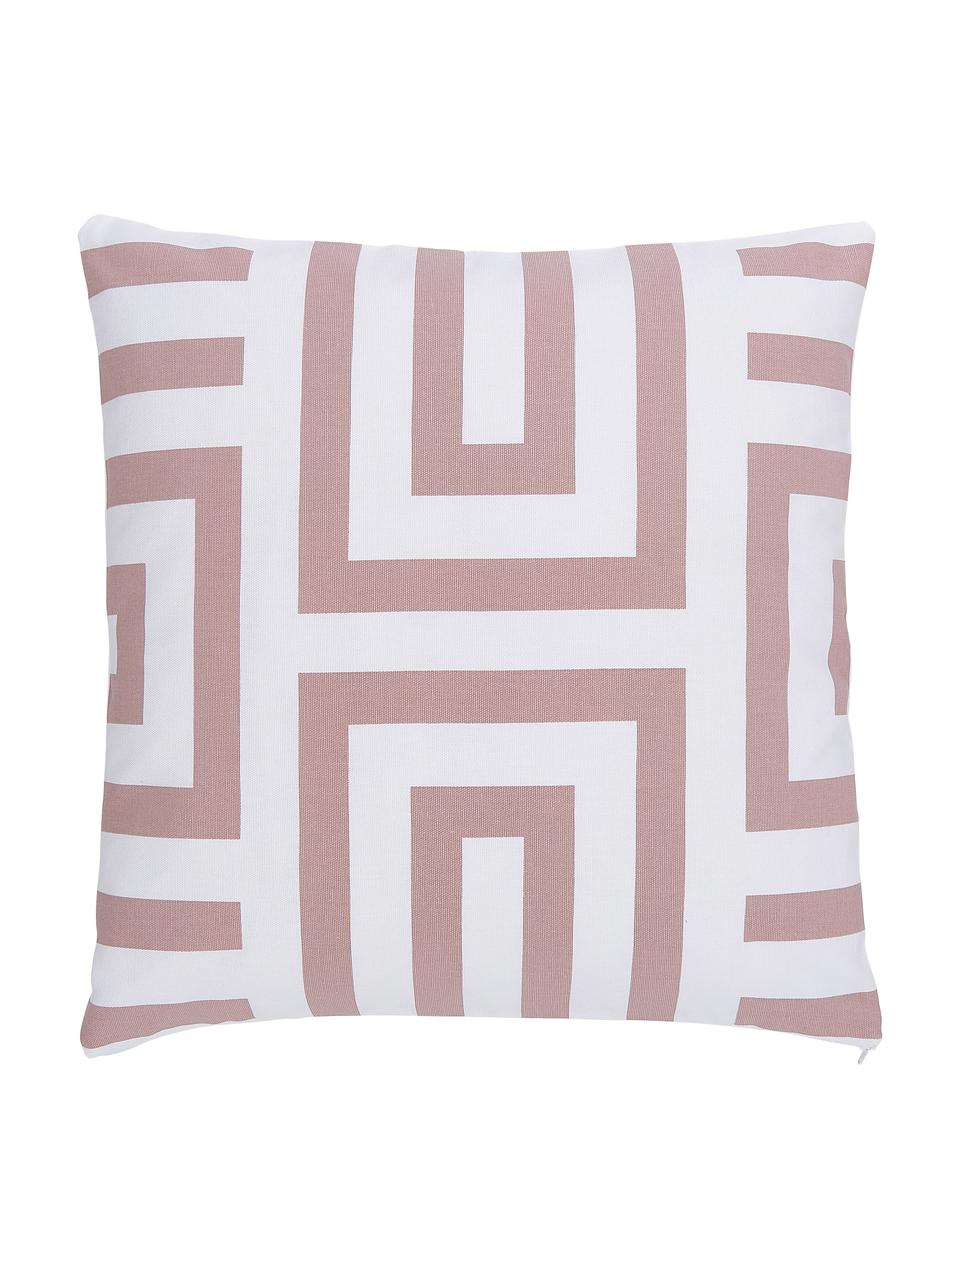 Fundas de almohada de lino lavado Nature, 2 uds., 100% algodón, Blanco, rosa palo, An 45 x L 45 cm